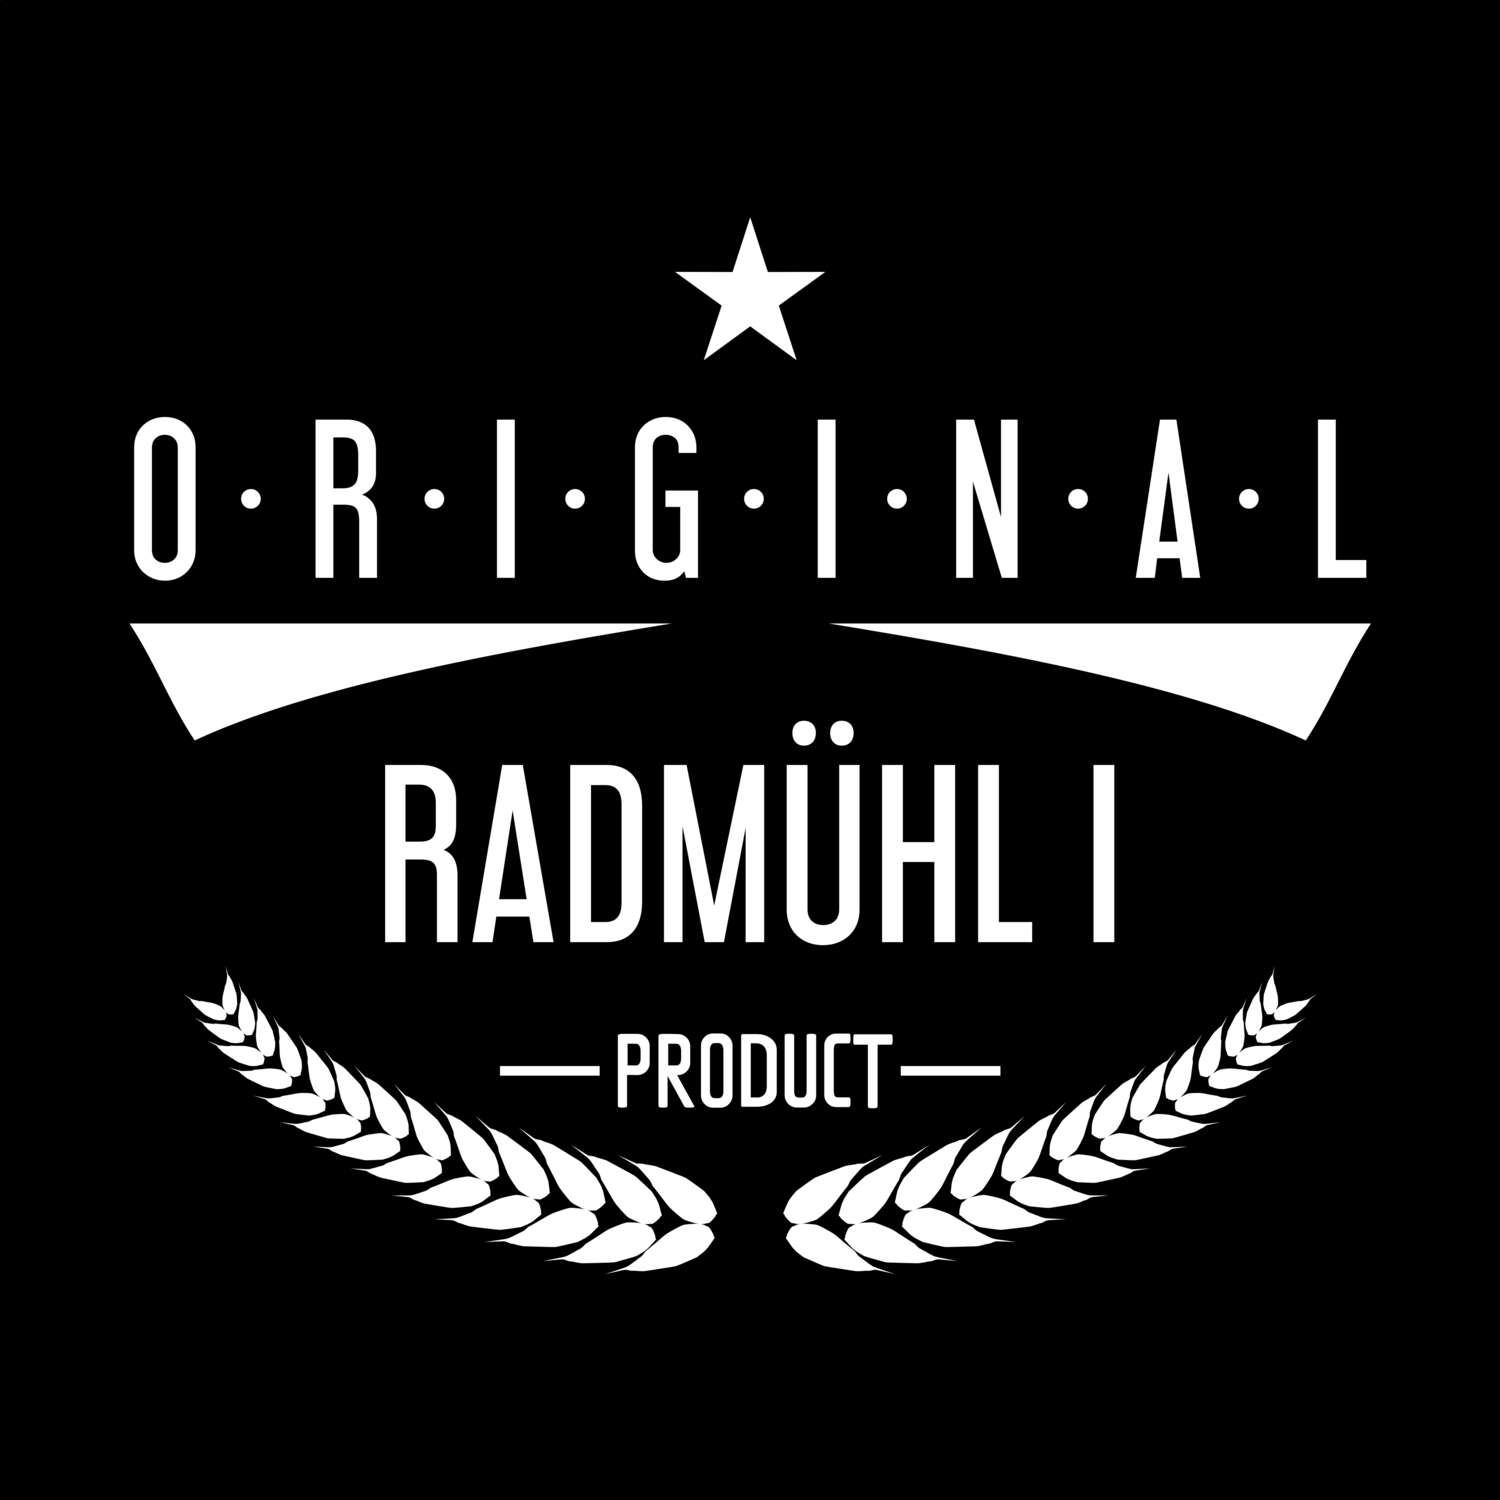 Radmühl I T-Shirt »Original Product«